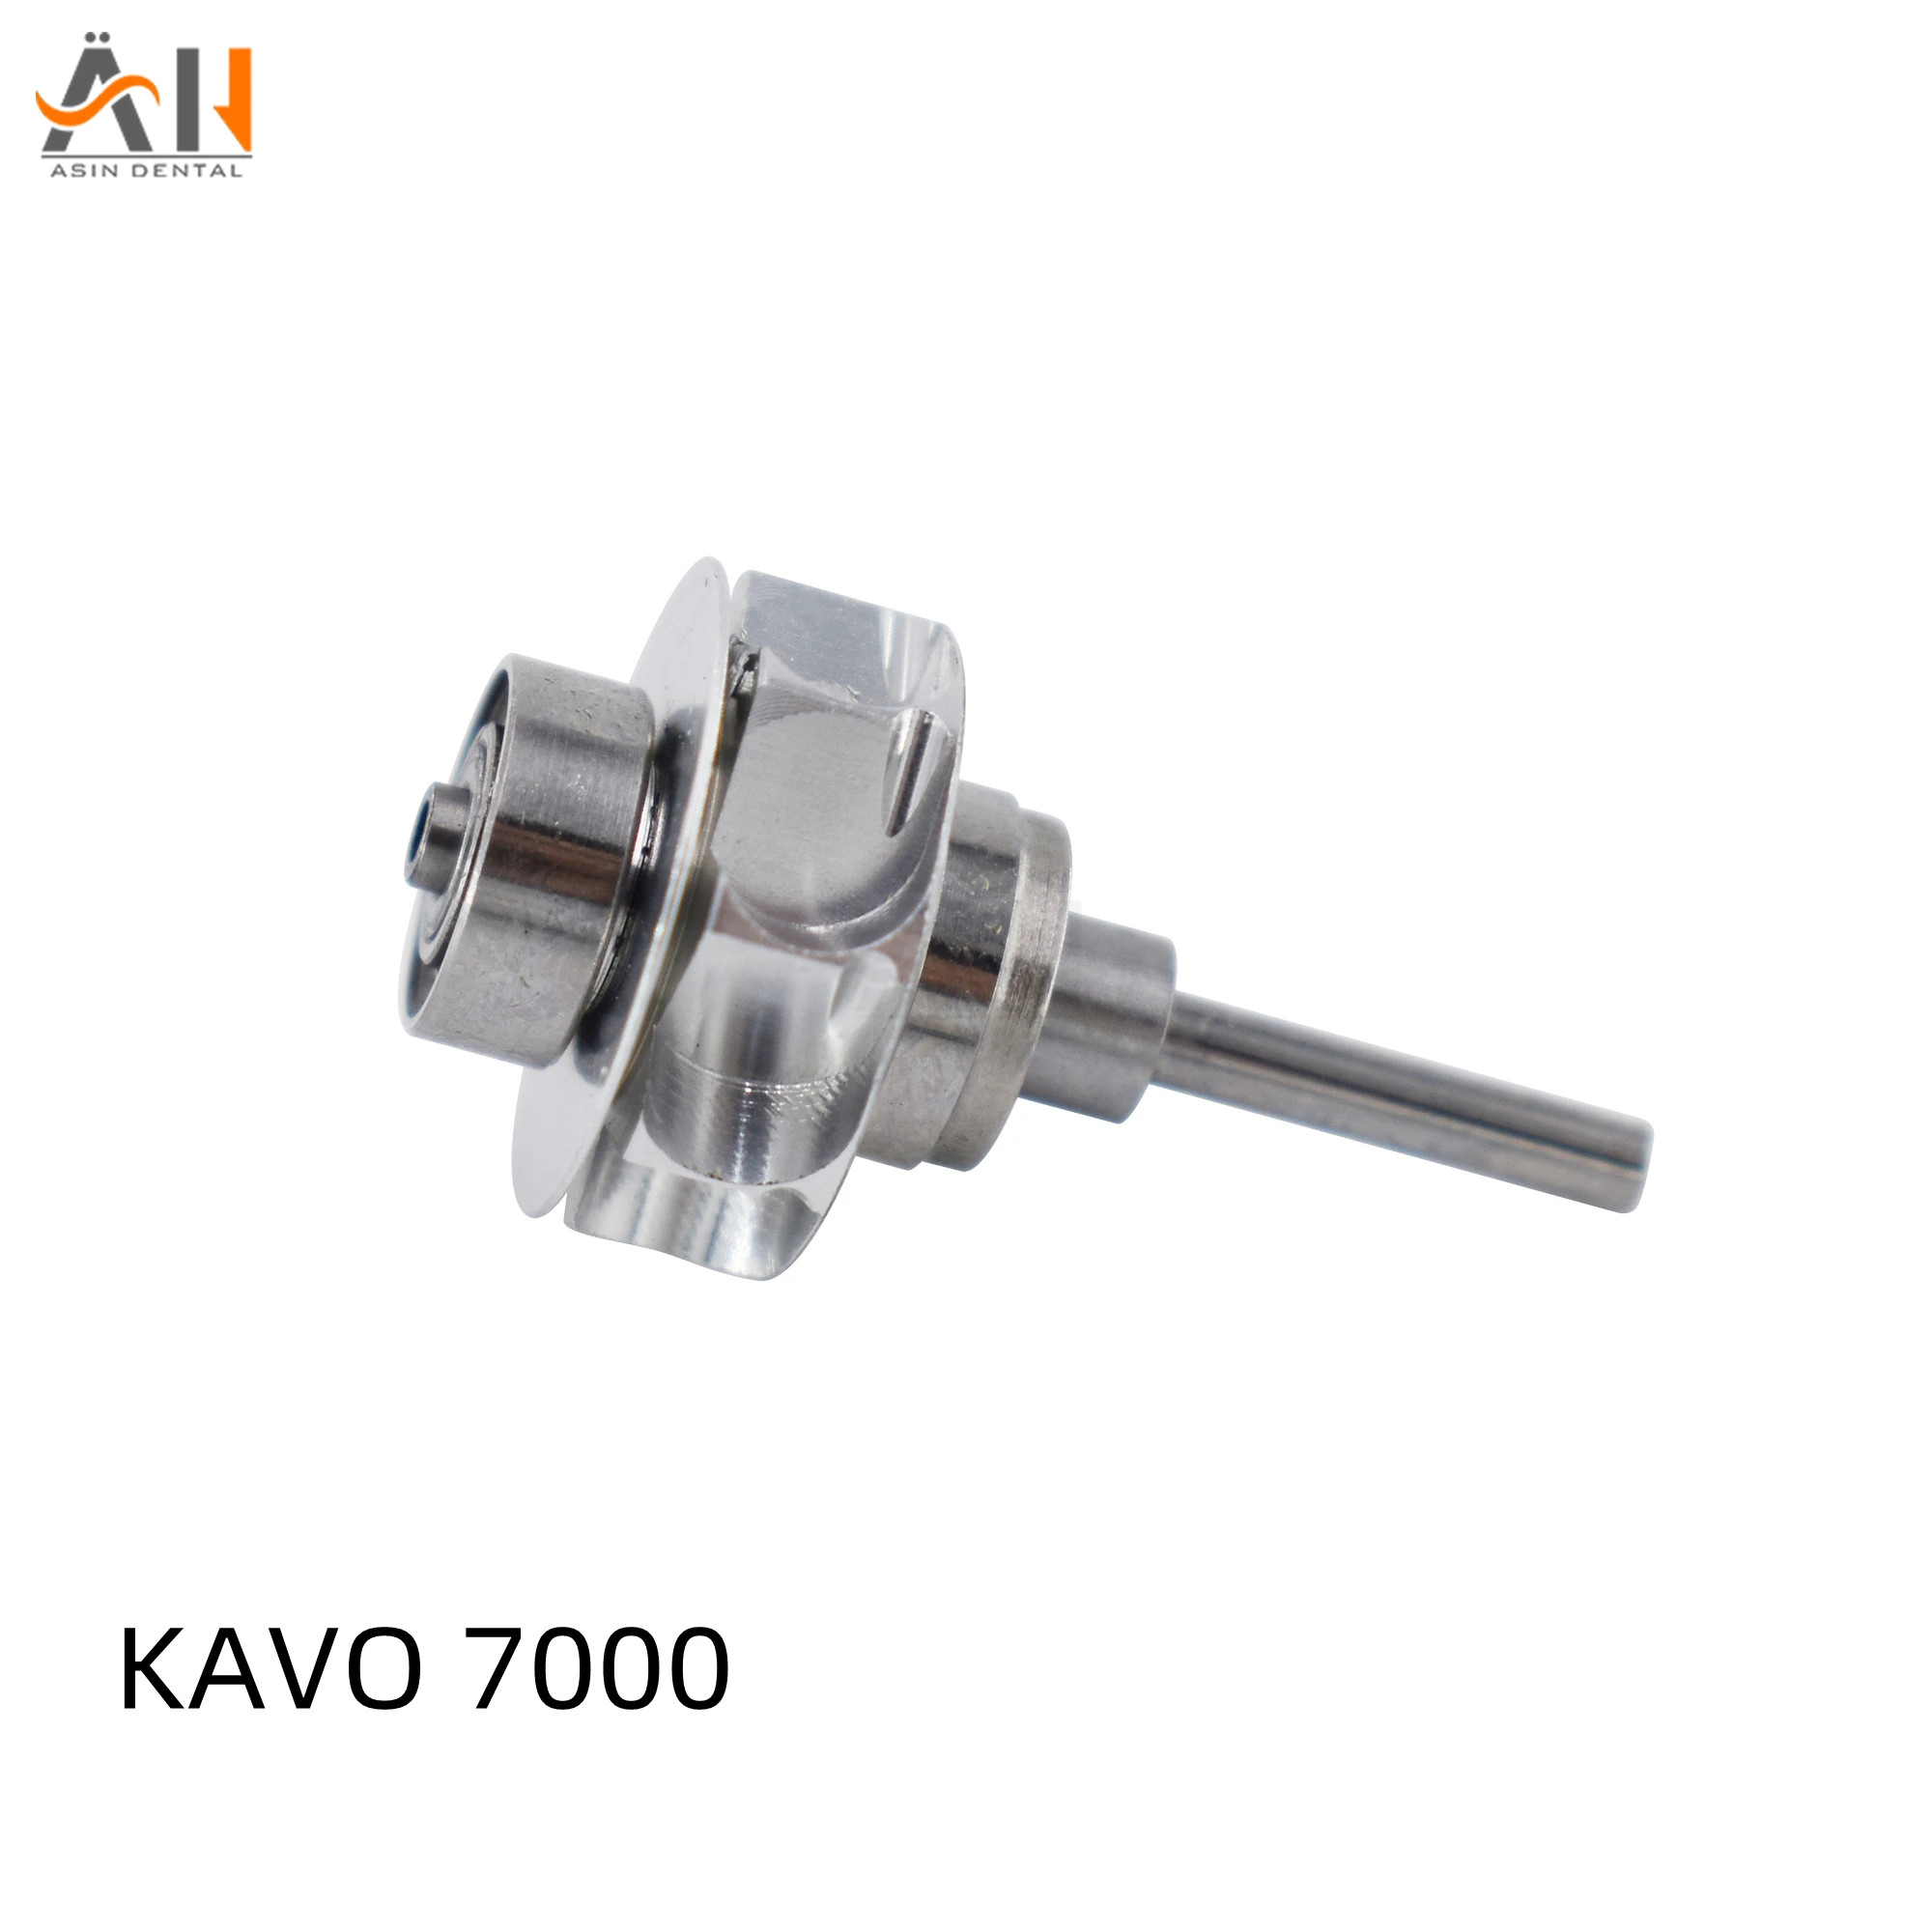 

1pcs*KAVO ROTOR PB6000 7000B 7000 B 7000C 7000 C ROTOR for KAVO TURBINE Handpiece dentistry handpiece accessory tools